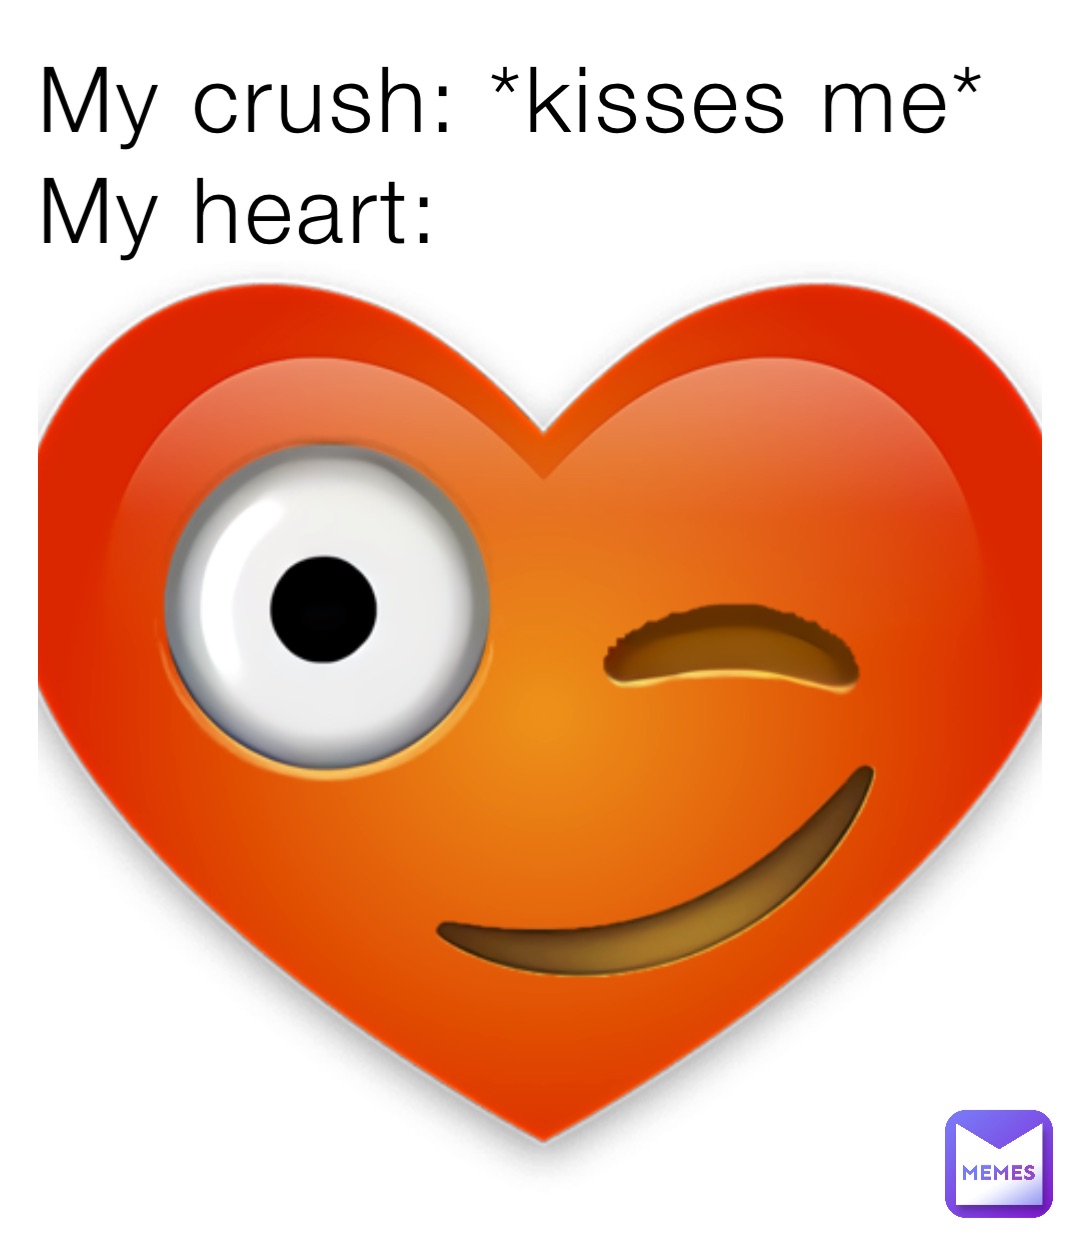 My crush: *kisses me*
My heart: